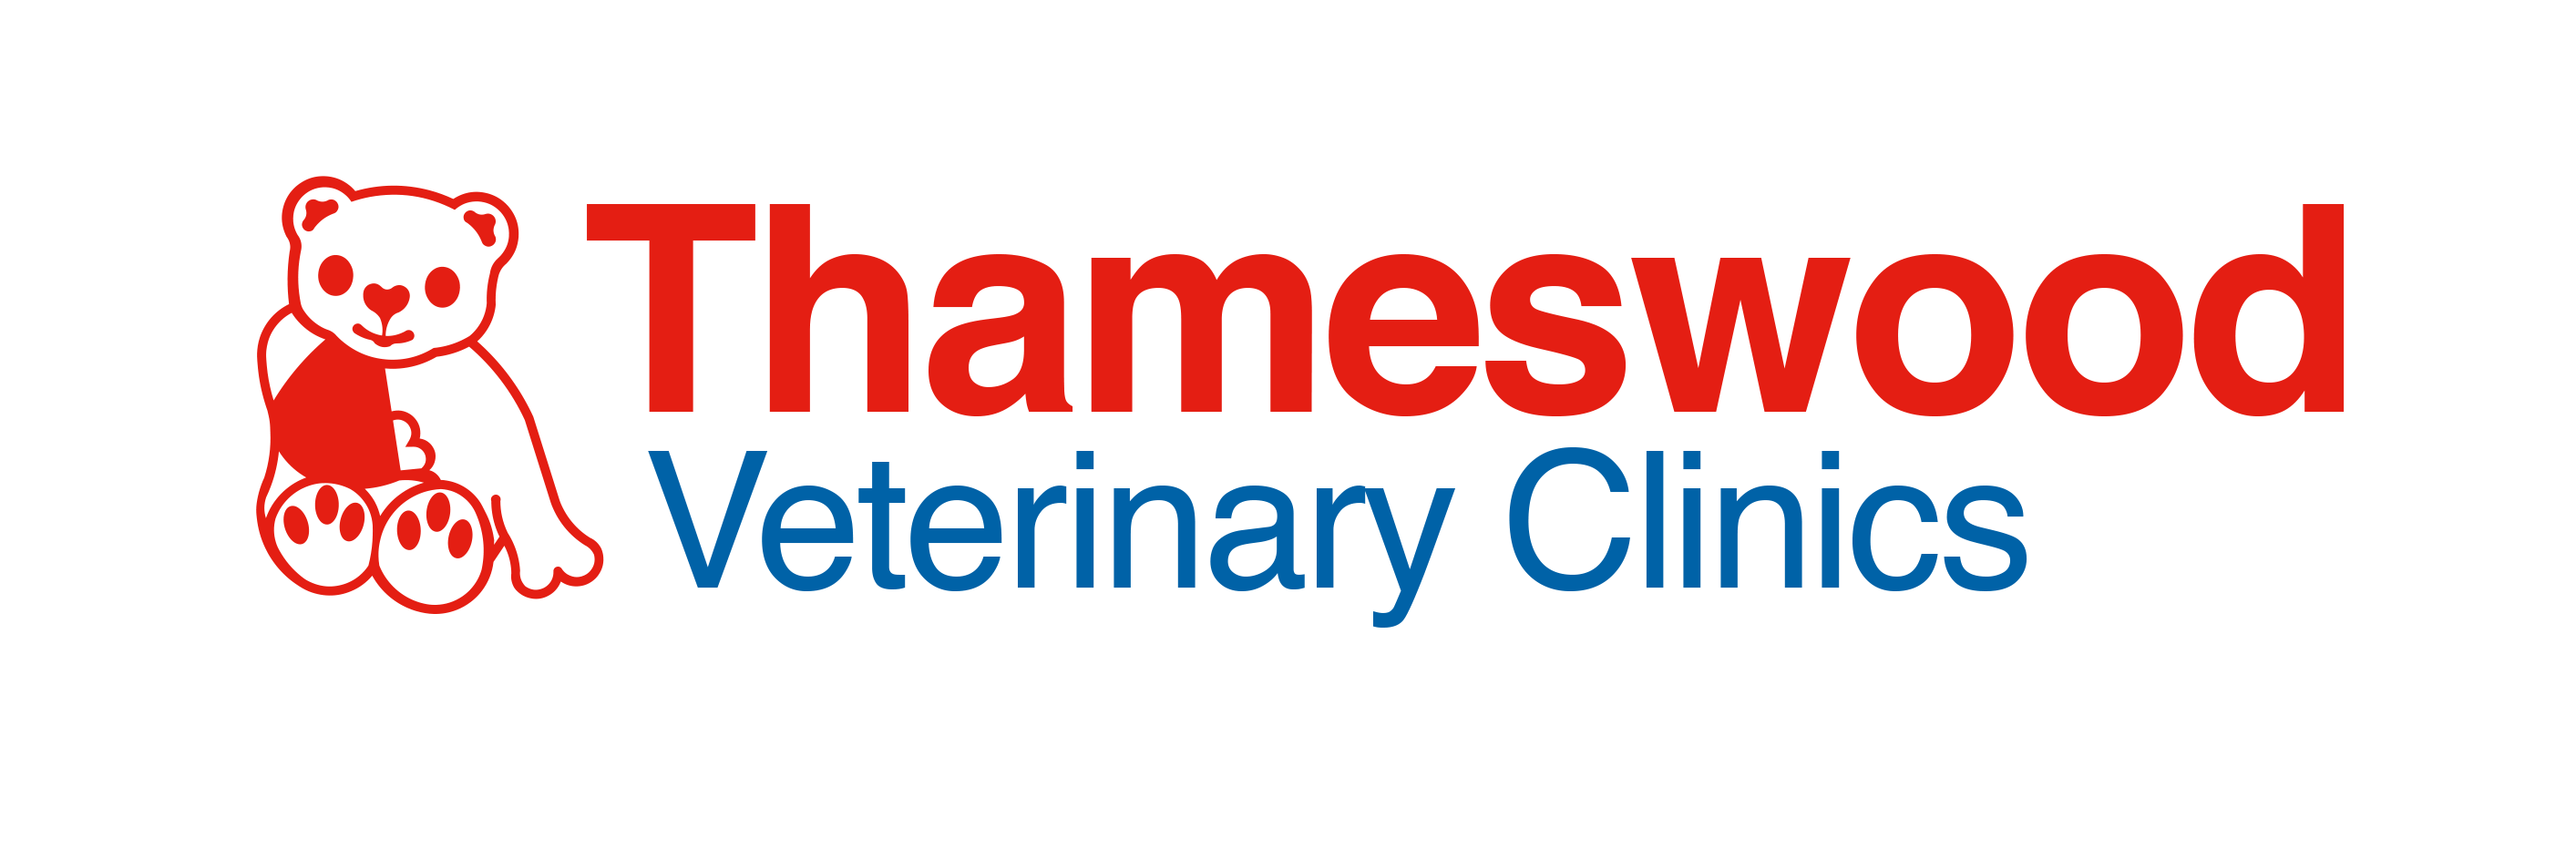 Thameswood Veterinary Clinic - Royal Wootton Bassett